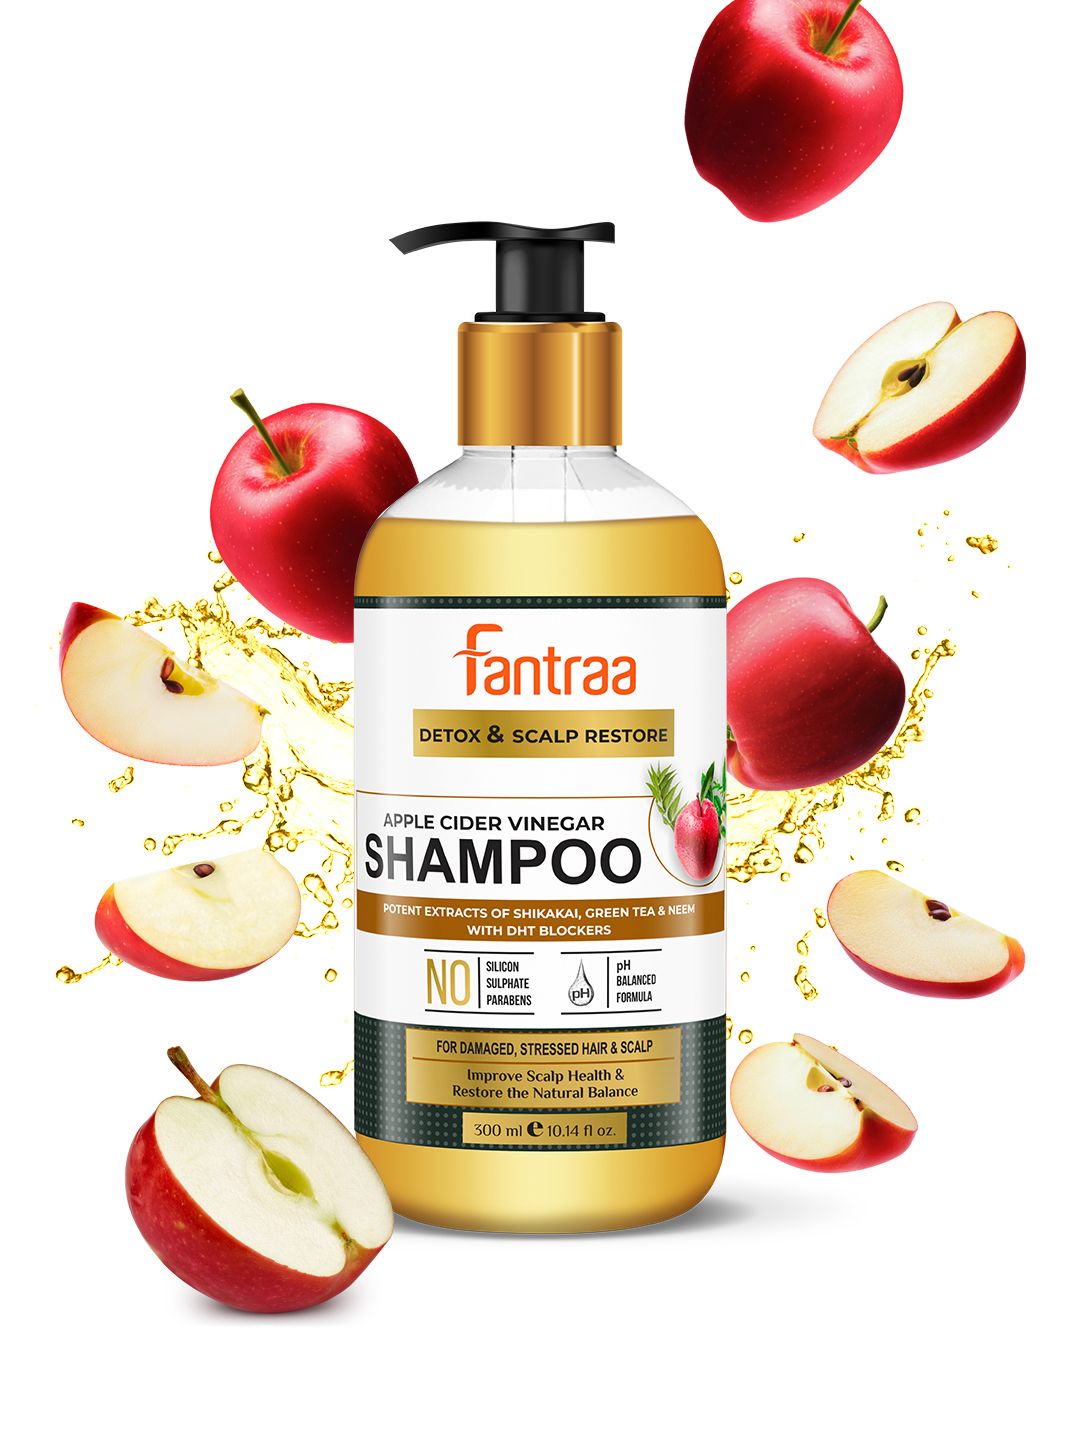 Fantraa Apple Cider Vinegar Shampoo - 300 ml Price in India